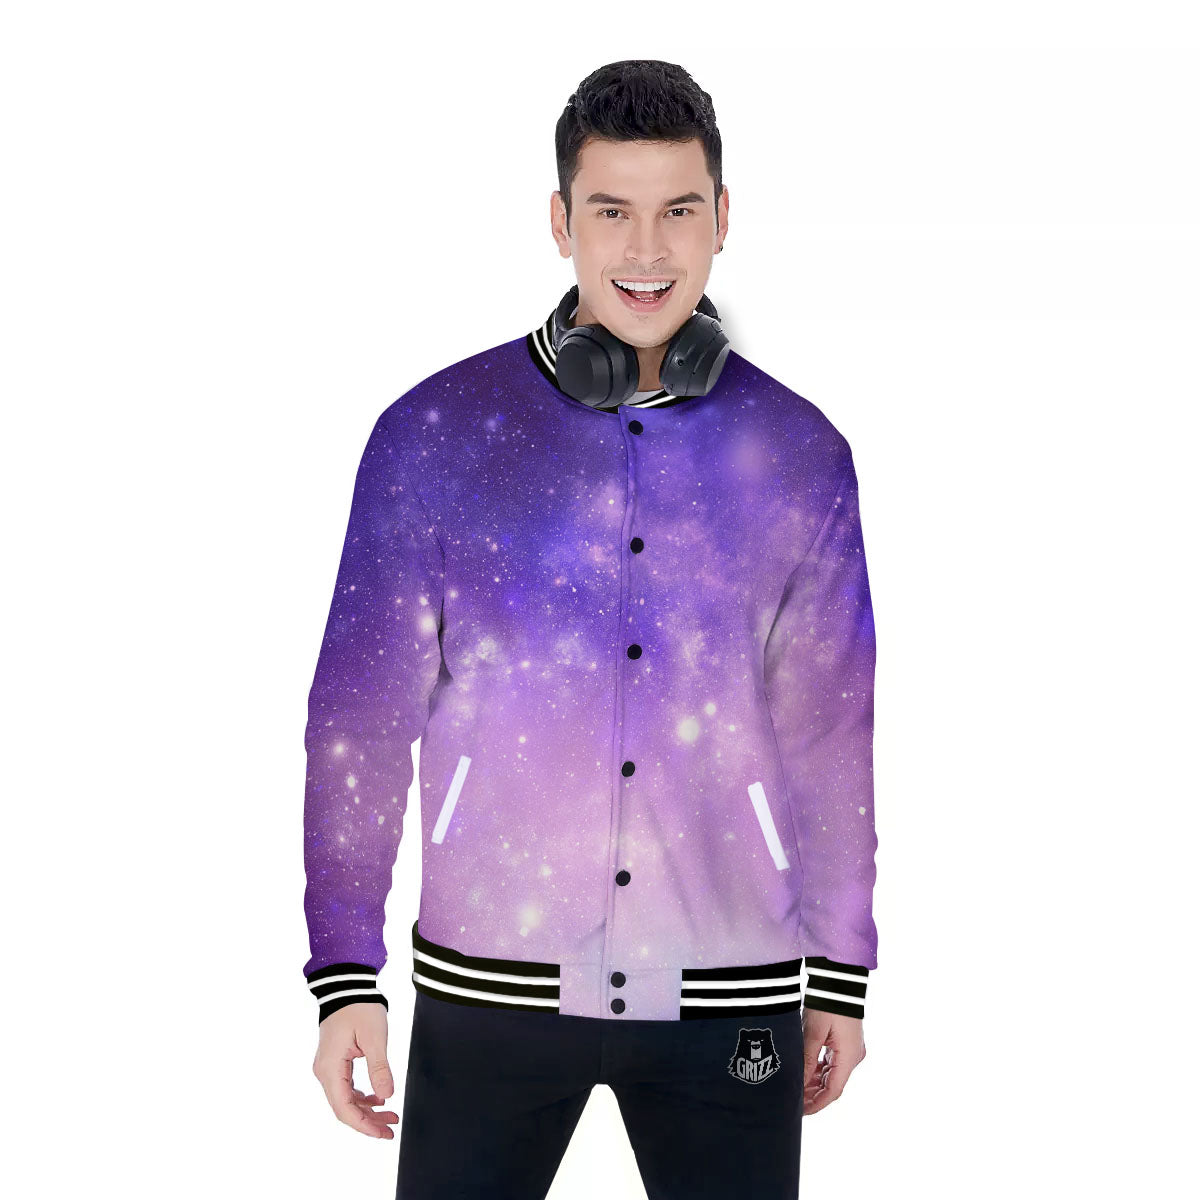 Grizzshopping Galaxy Space Purple Stardust Cloud Print Baseball Jacket